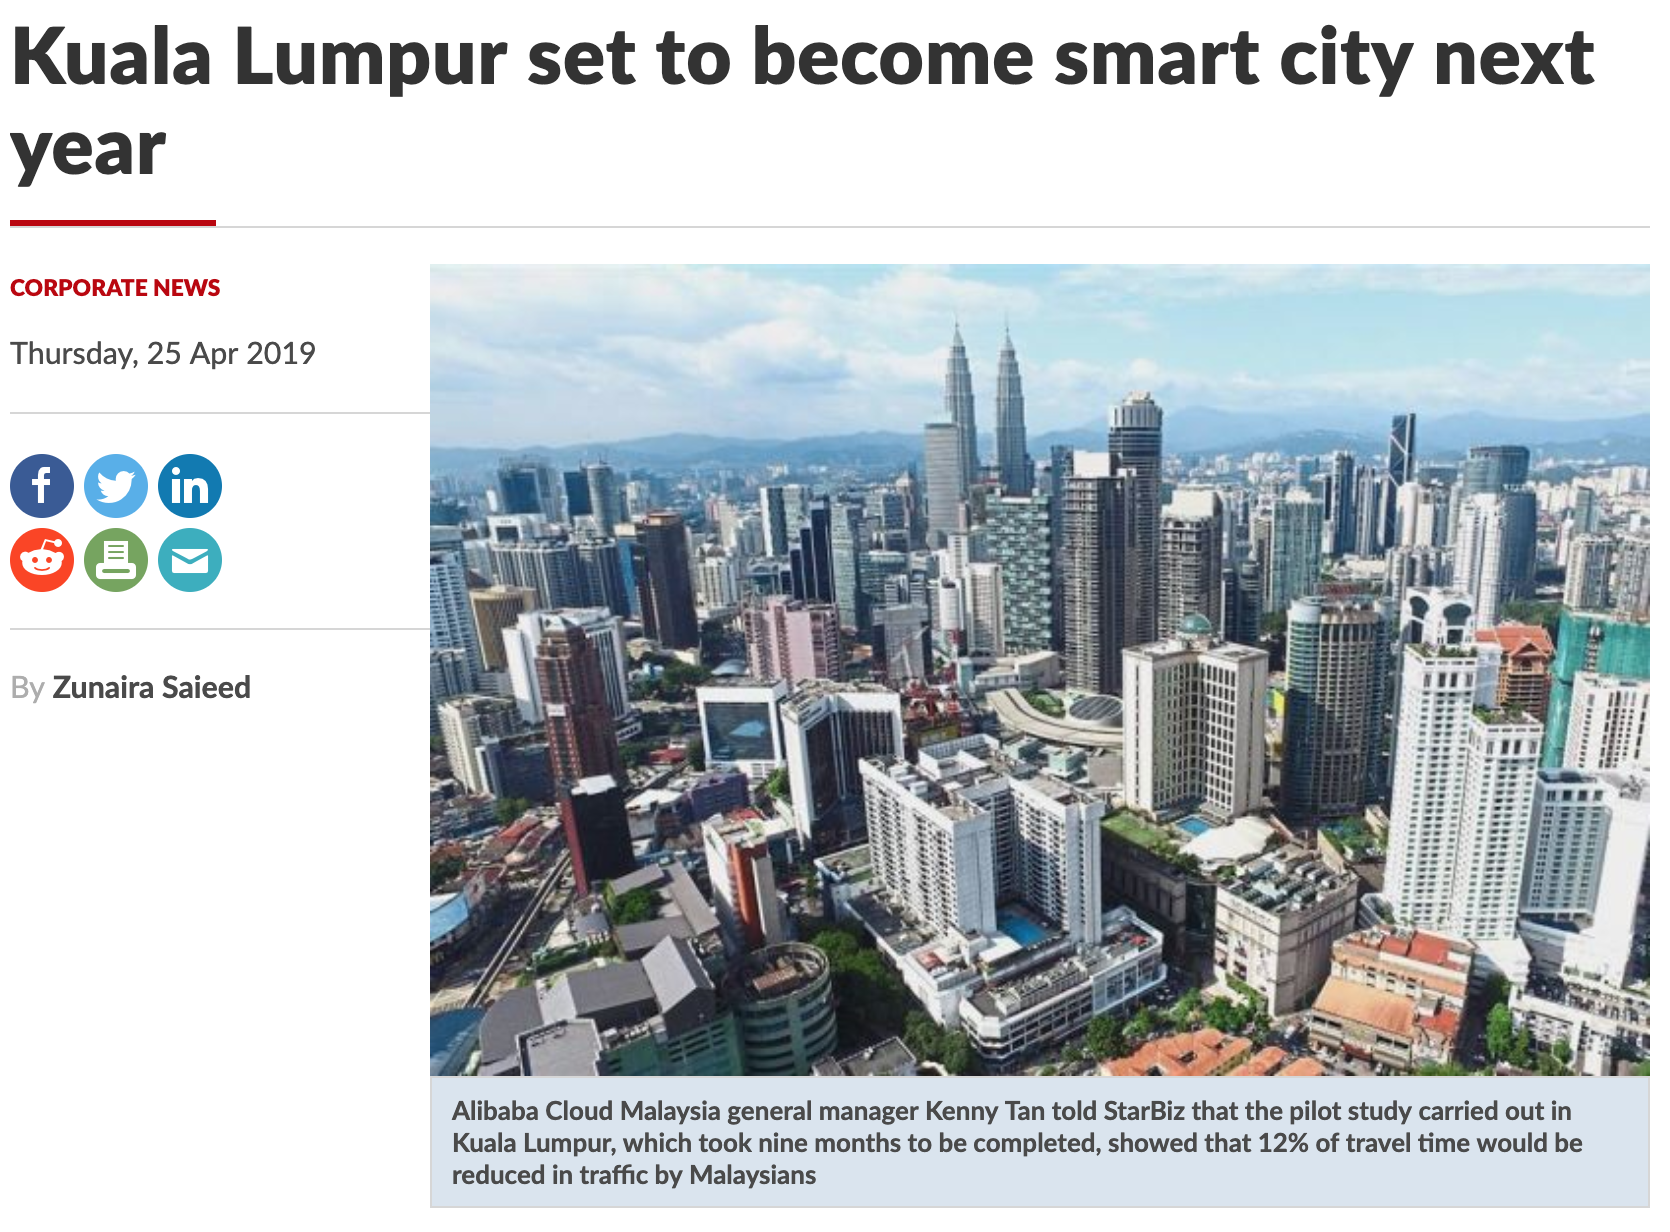 How Smart should a Smart City be?